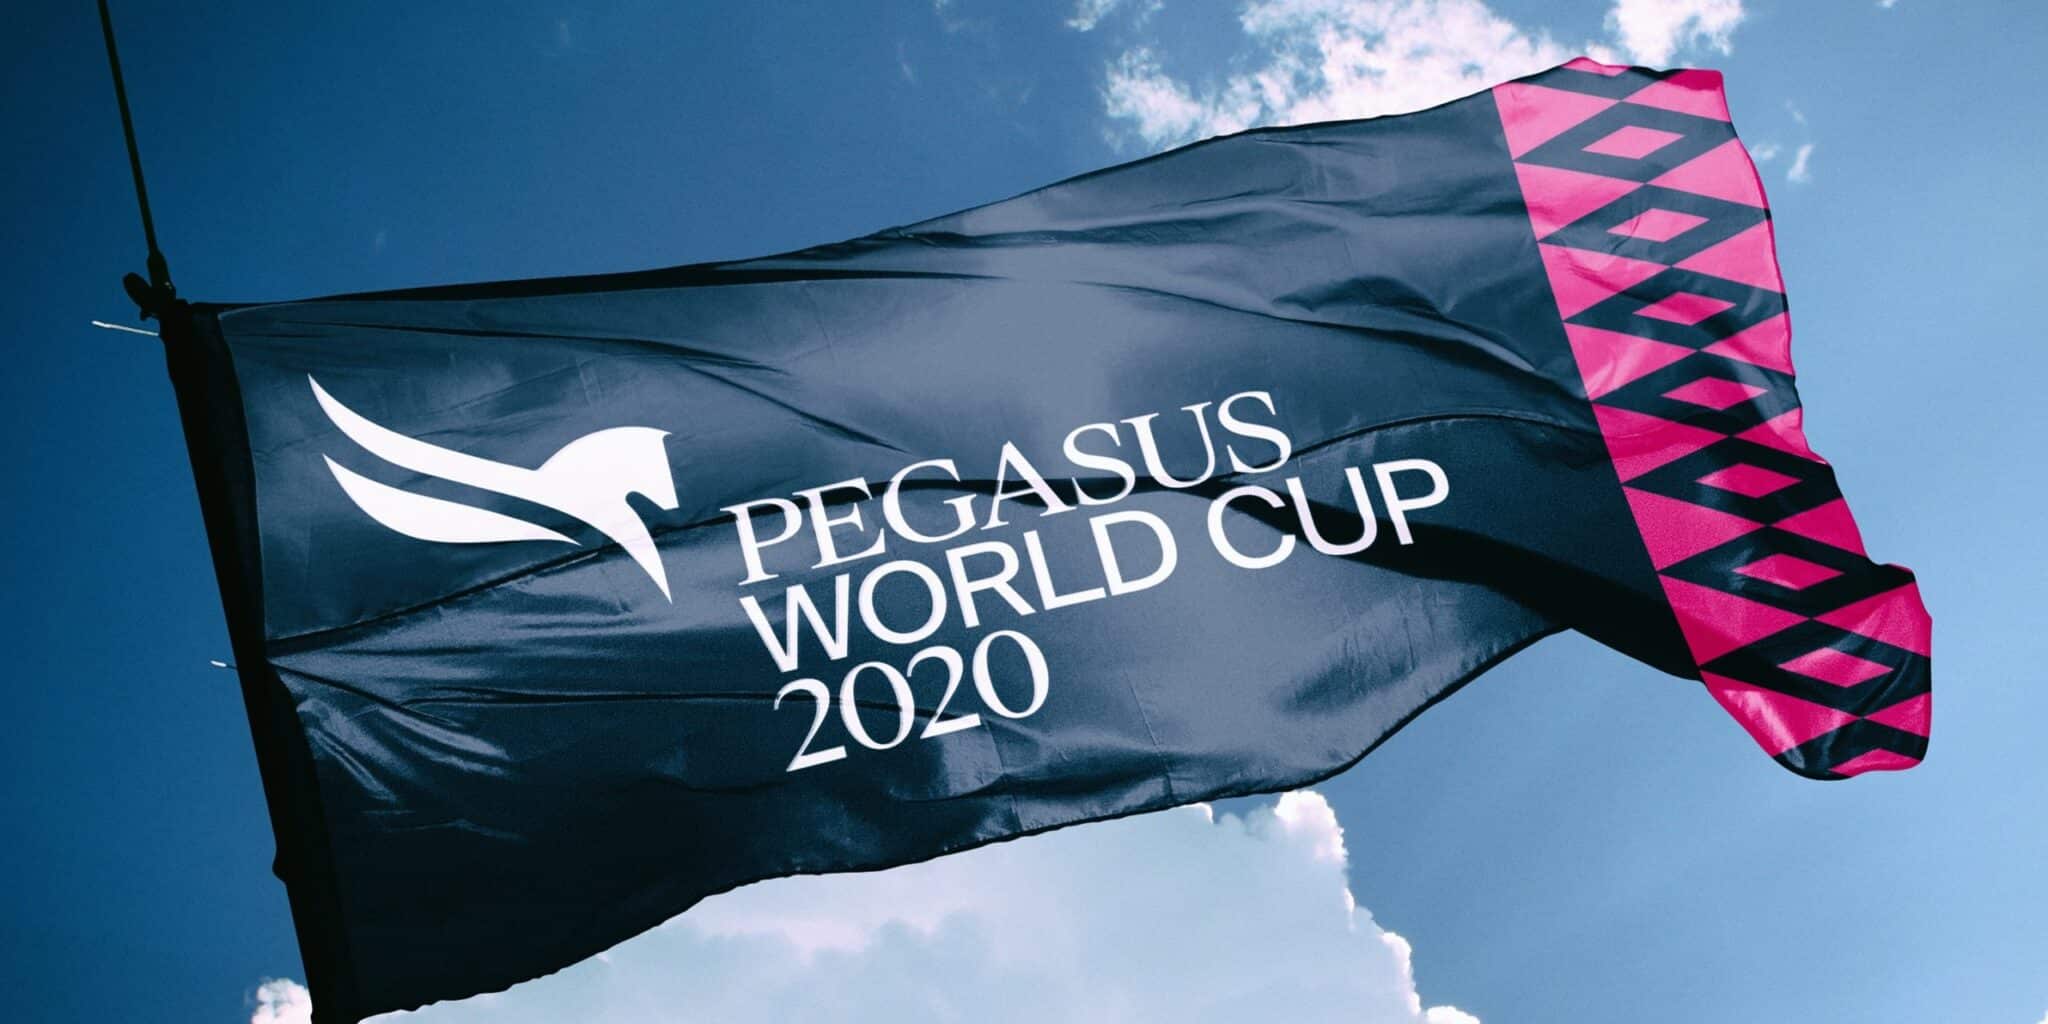 Stronach Shrinks Purses of Pegasus World Cup Races Horse Racing